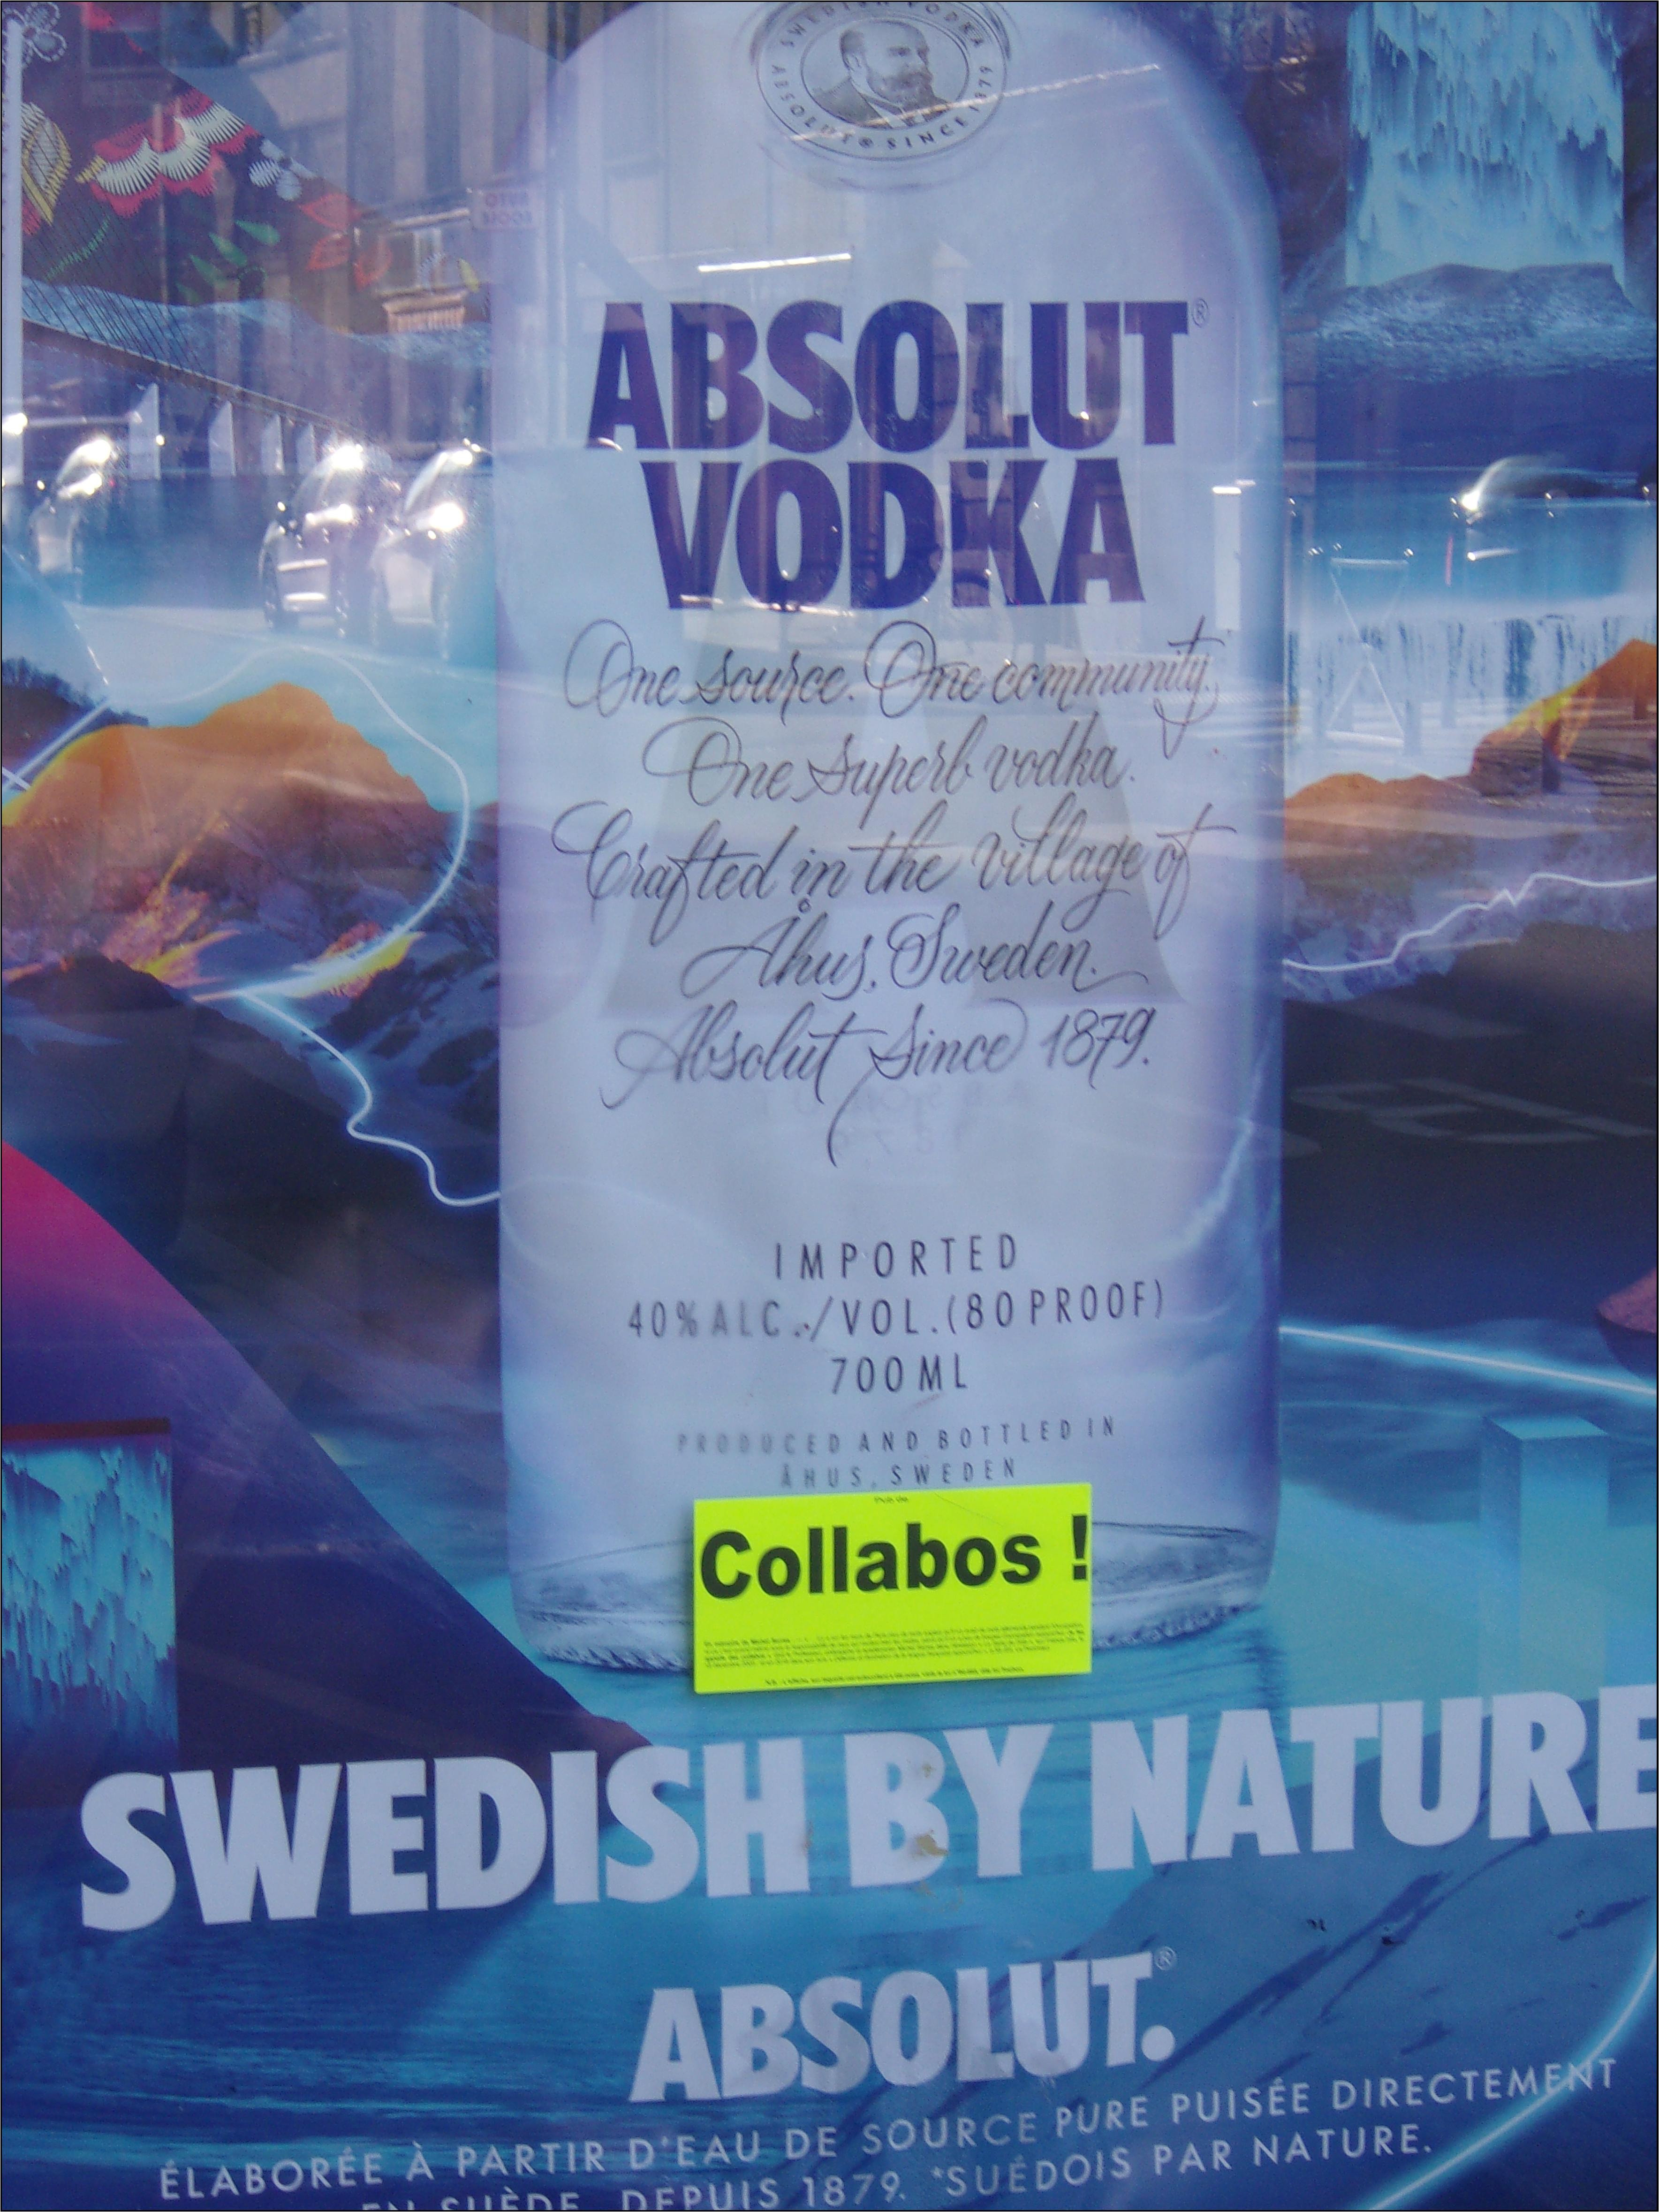 Vodka swedish by nature